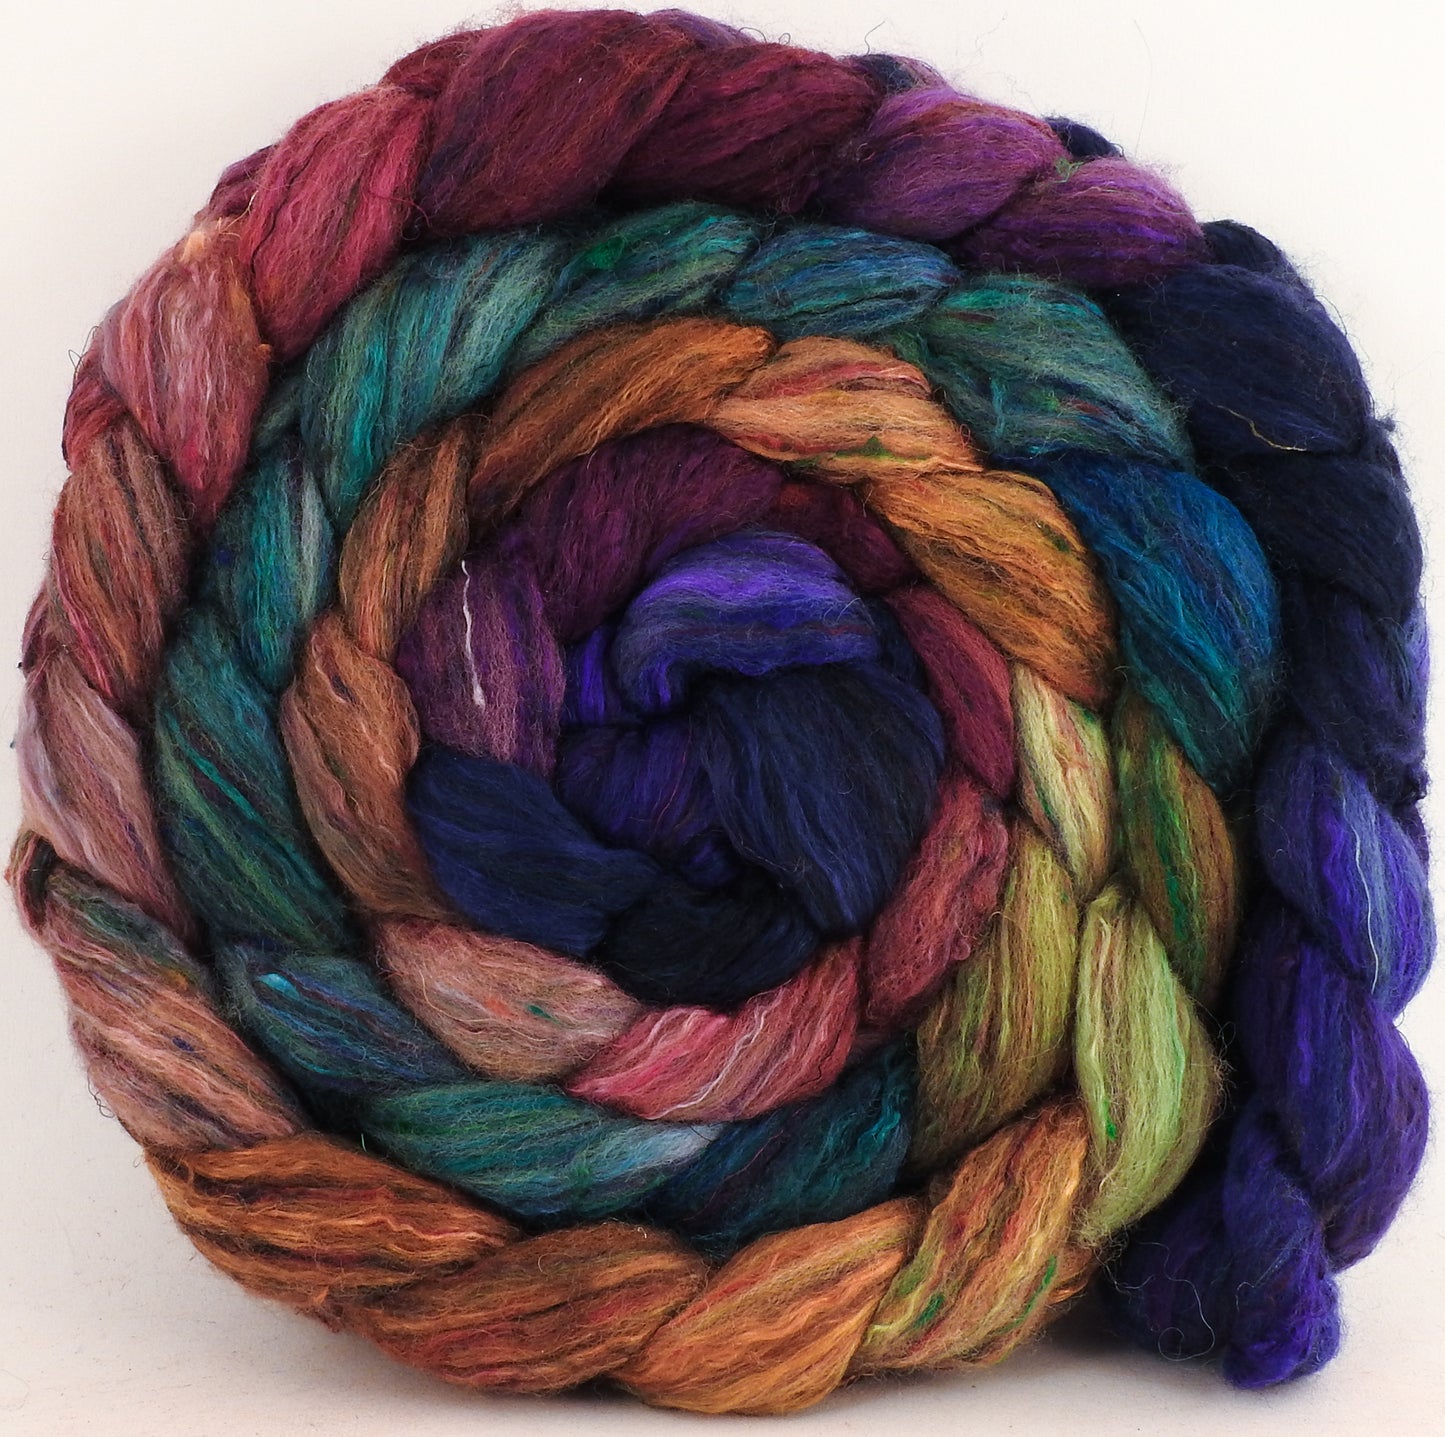 Batt in a Braid #39 -Yarn bombing (5.5 oz) - Falkland Merino/ Mulberry Silk / Sari Silk (50/25/25) - Inglenook Fibers